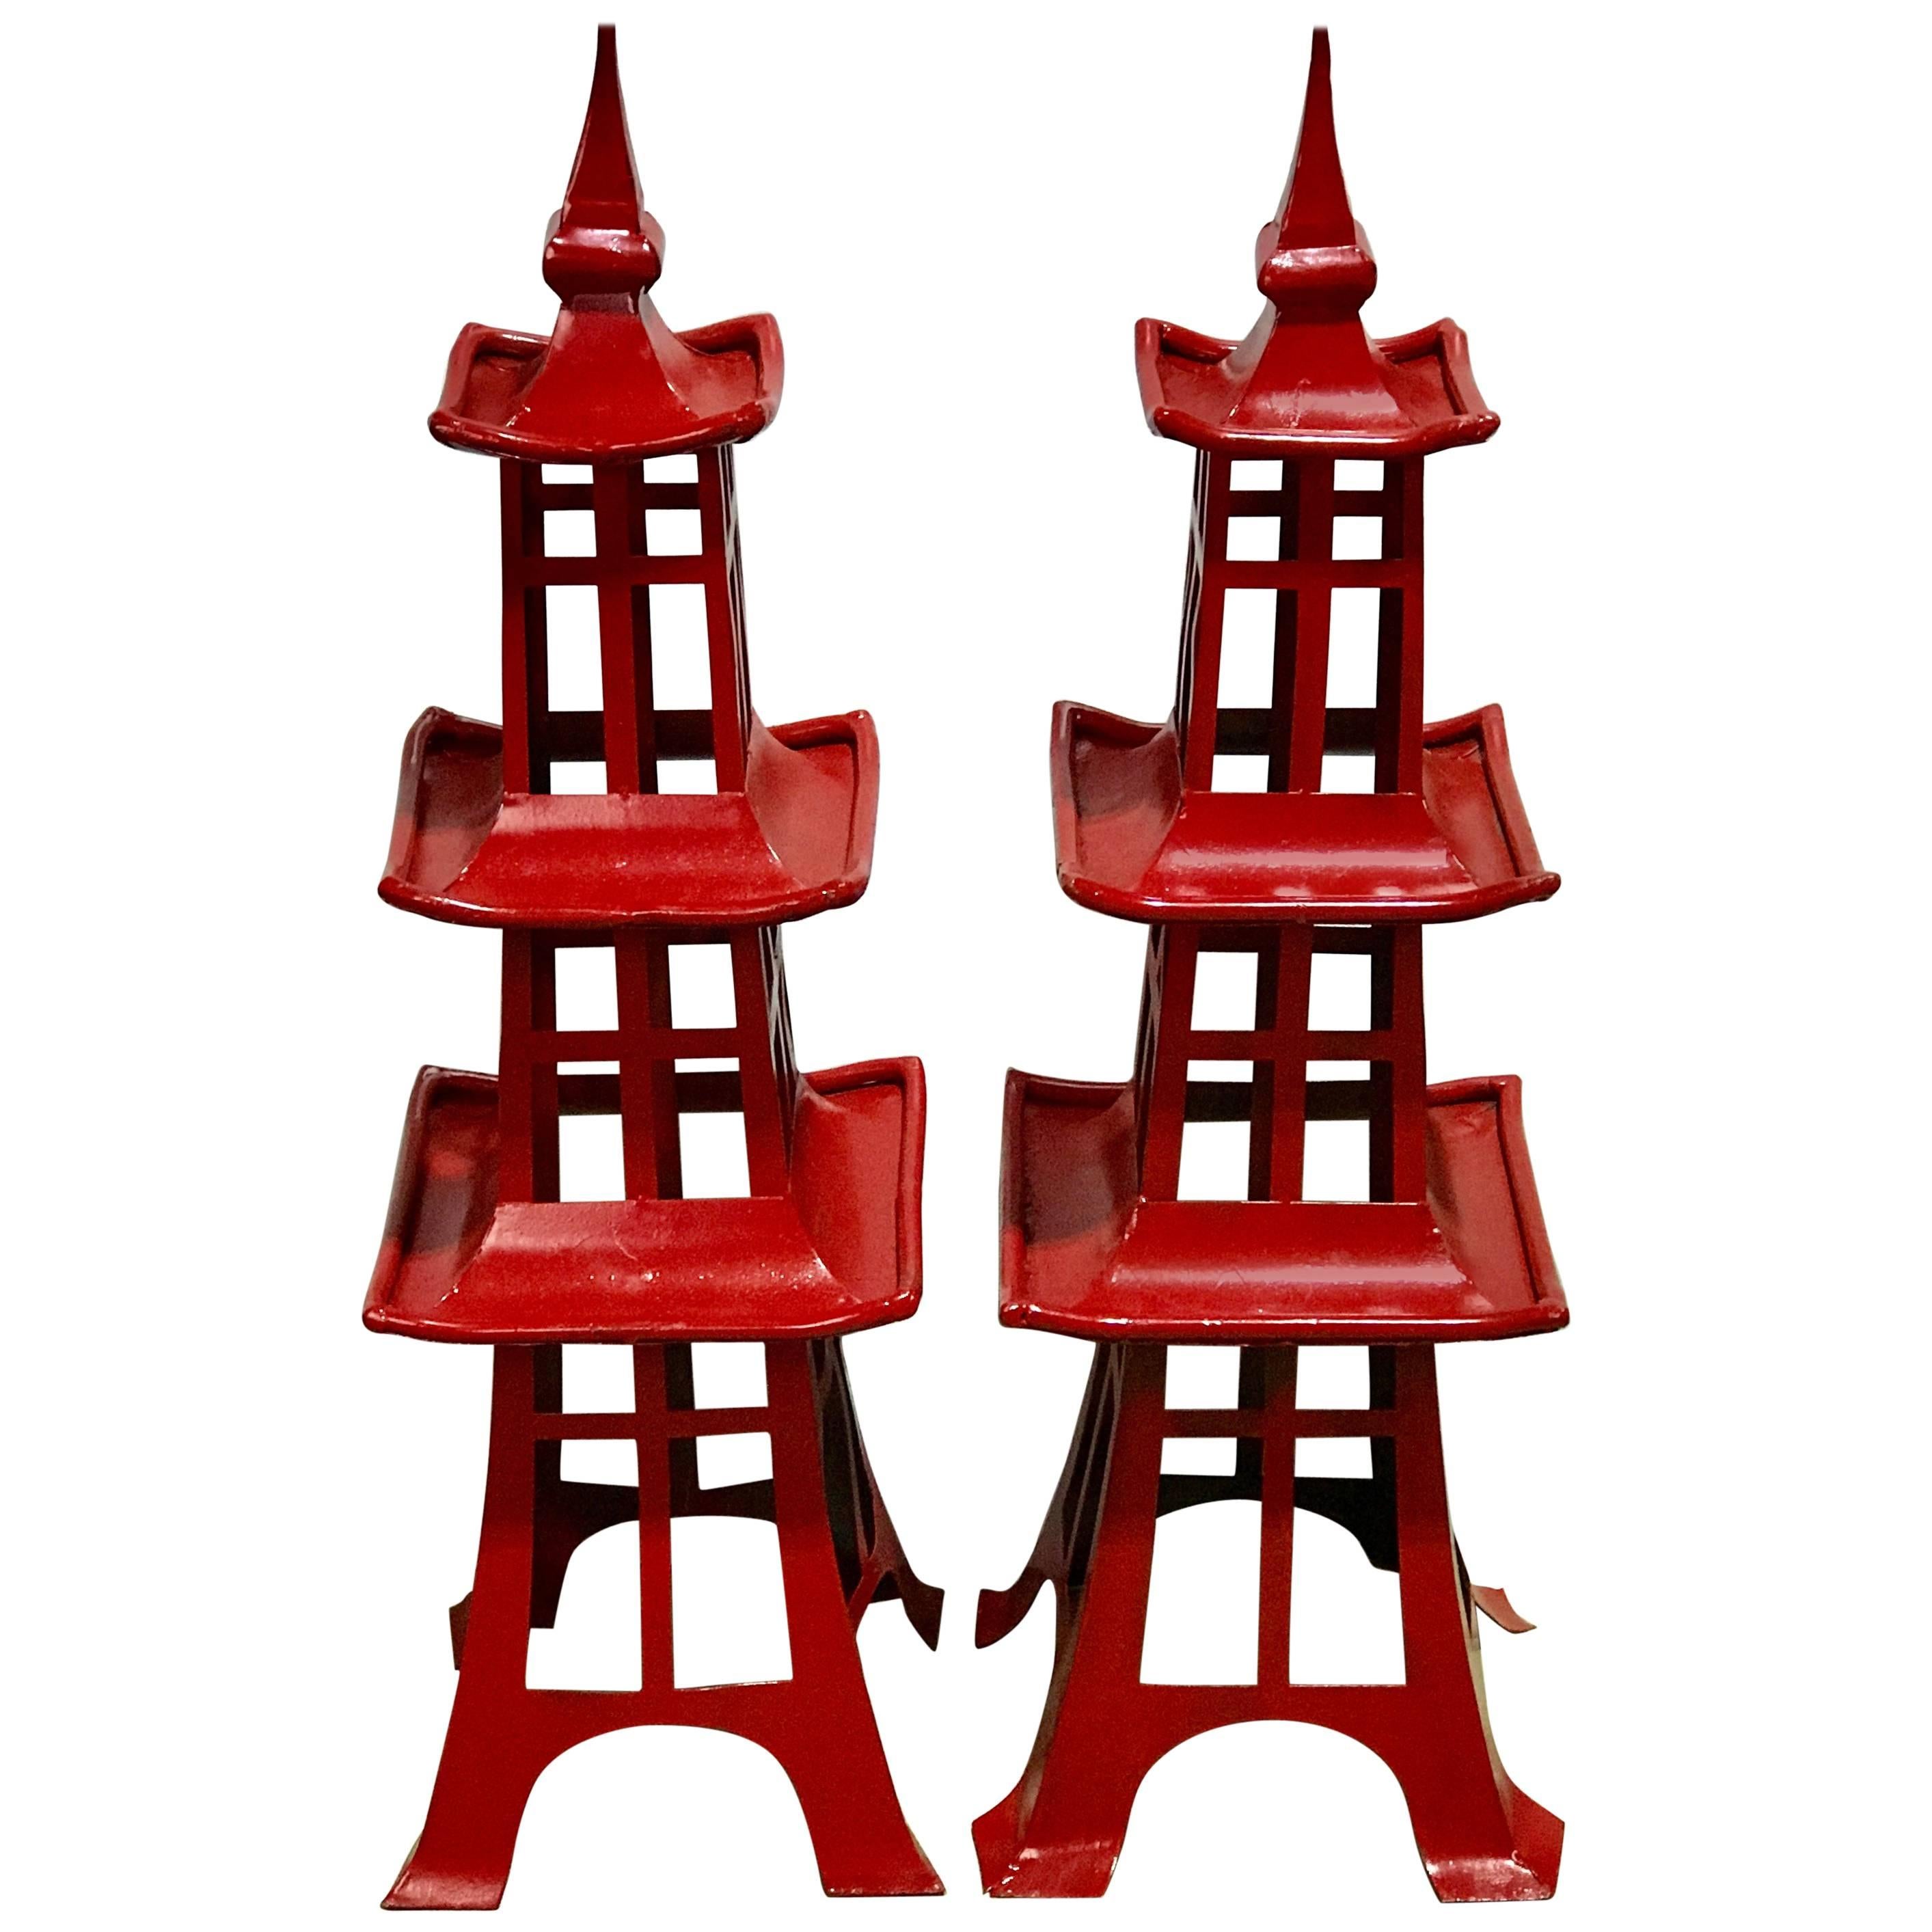 Pair of Midcentury Red Japanese Pagodas, from Walt Disney World